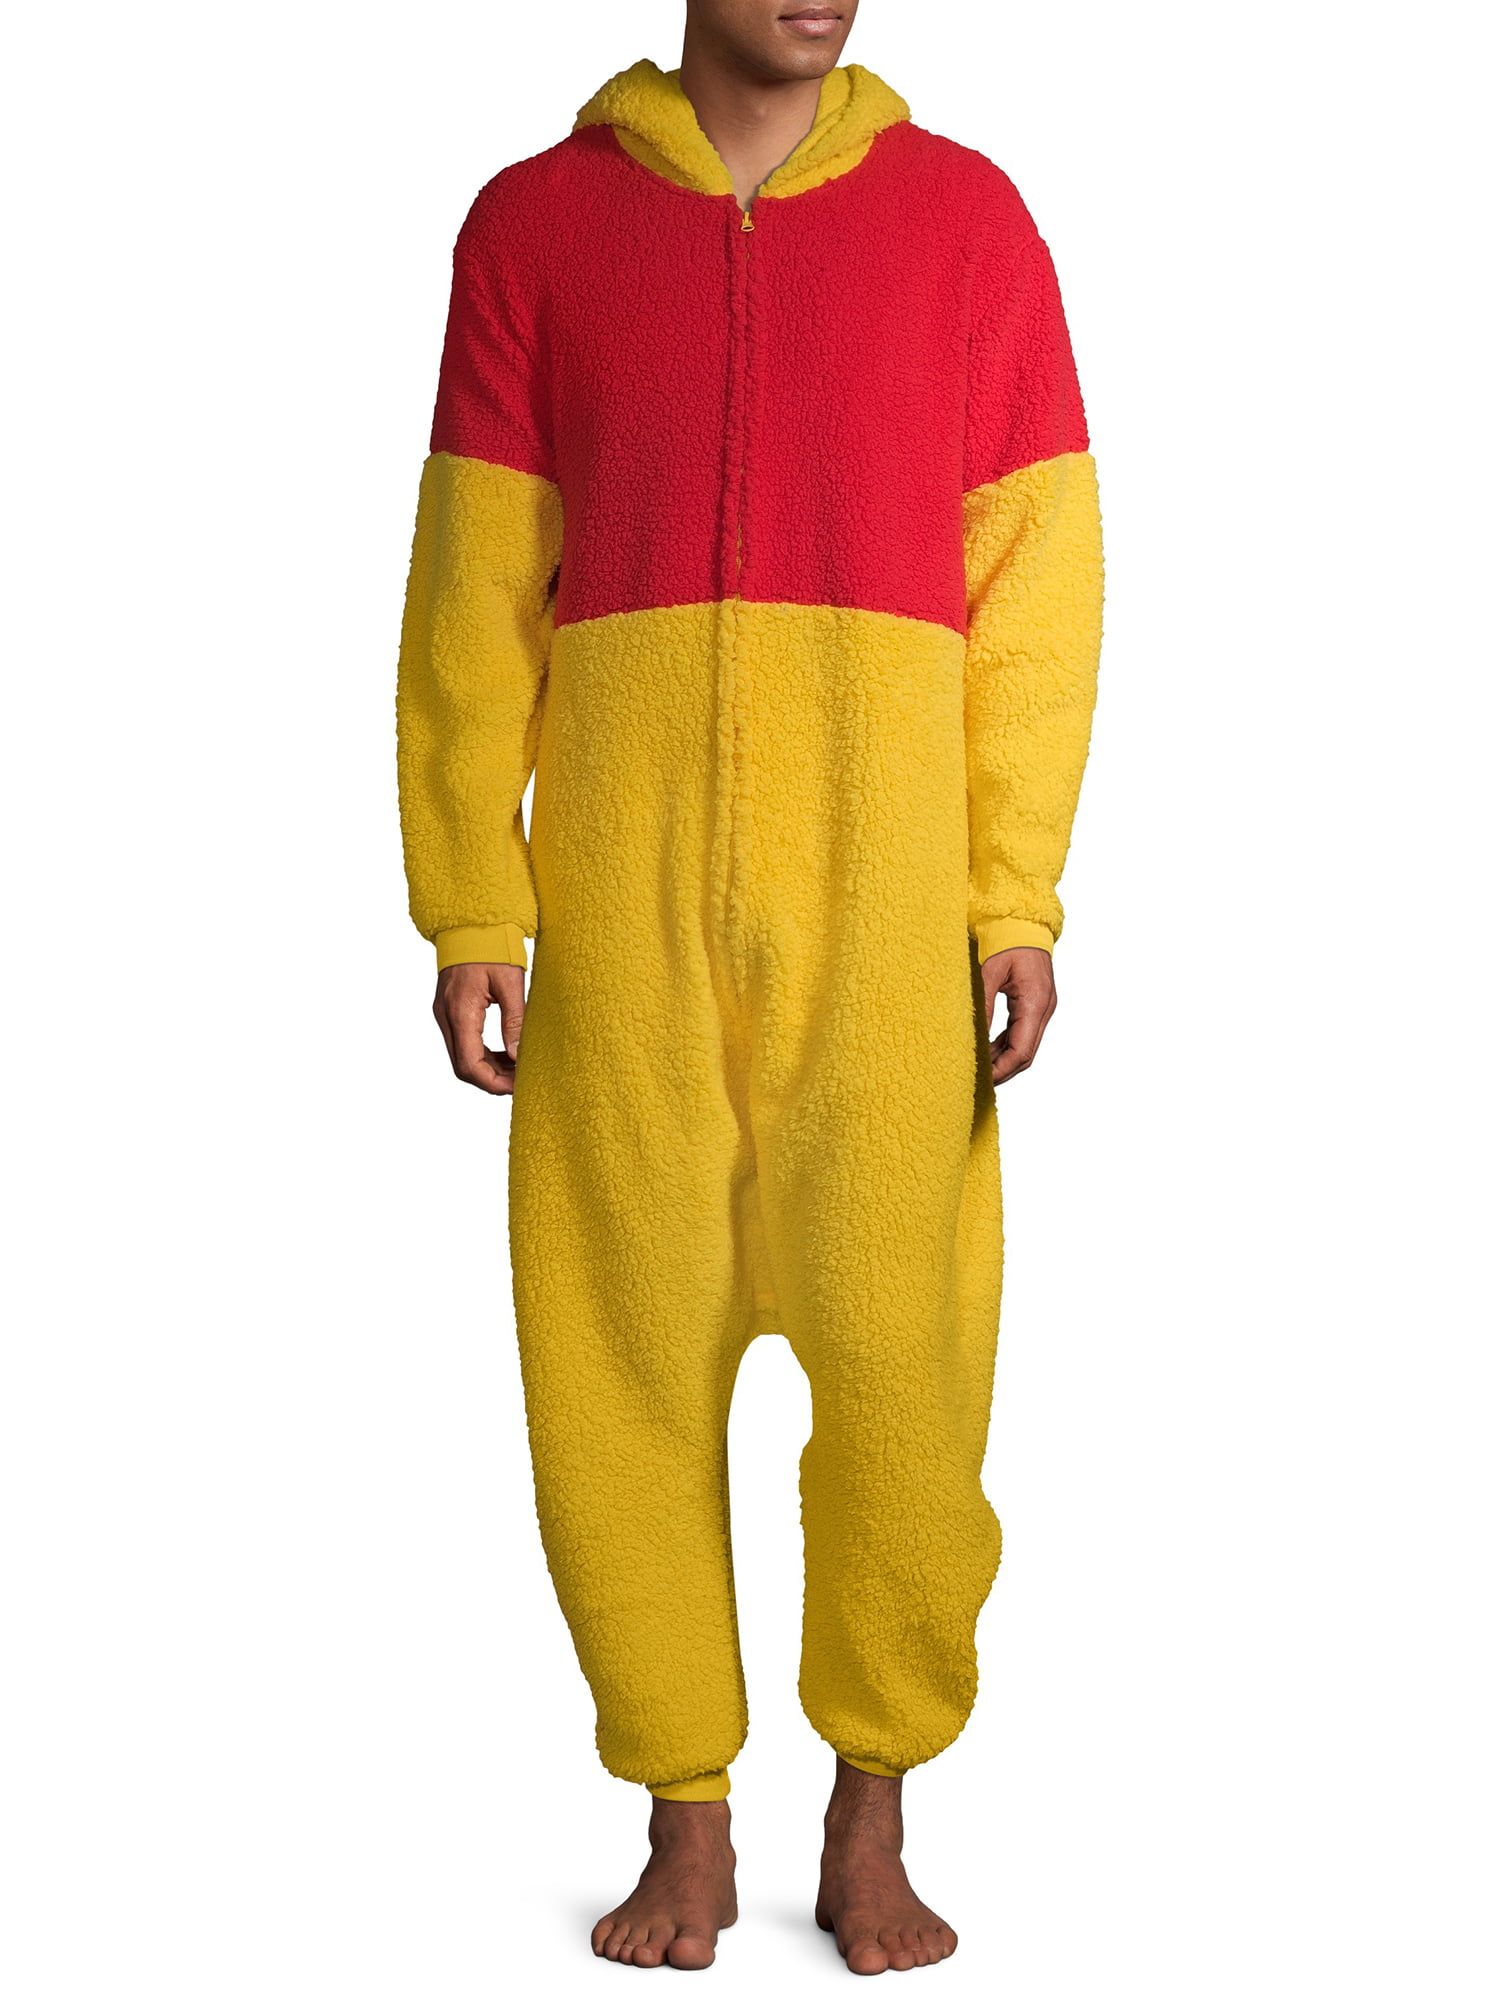 Disney, Adult Winnie the Pooh Pajamas Union Suit, Sizes S-XL -